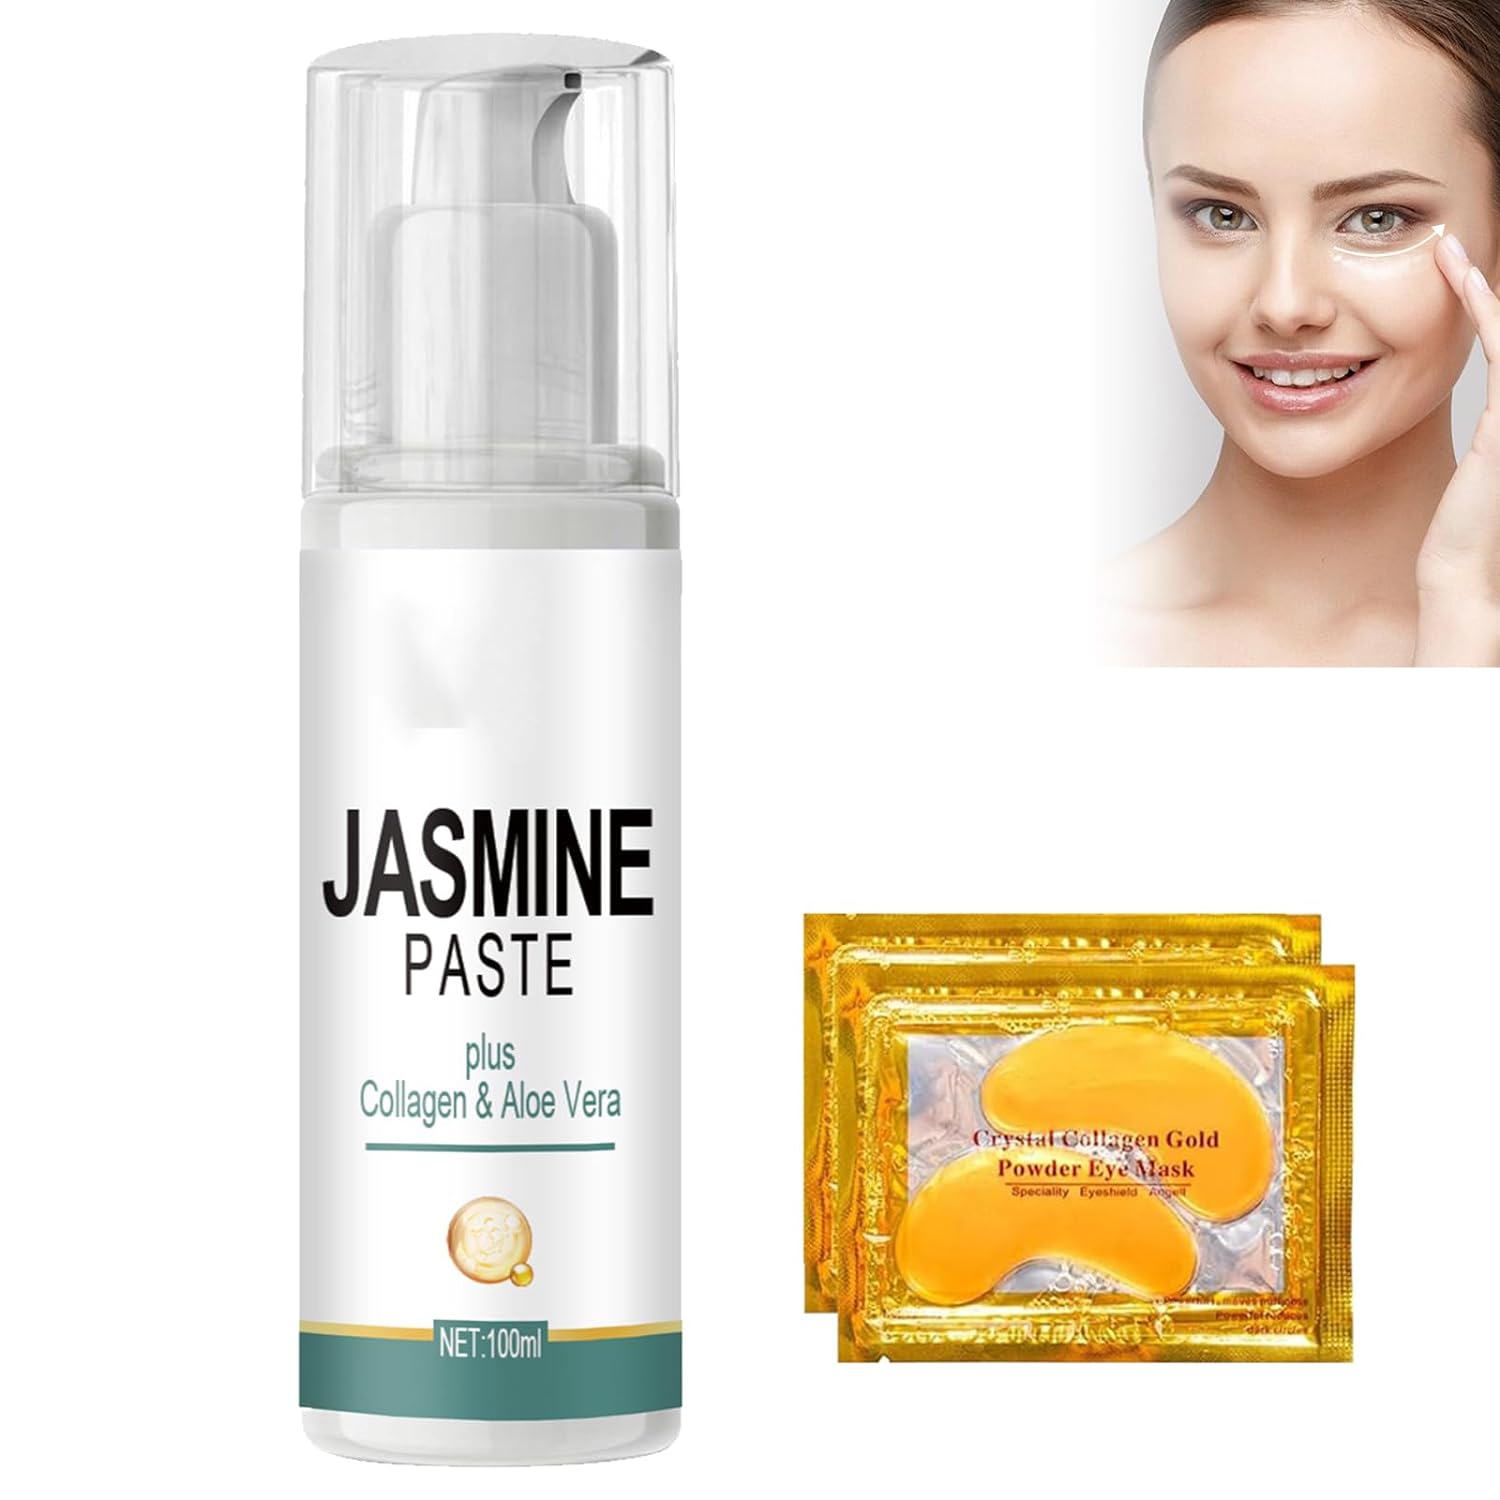 Jasmine Cream for Dark Circles, Slip-On Eyelids Active Jasmine Ointment, Jasmine Ointment Dark Circles, Jasmine Ointment Plus, Jasmine Ointment for Dark Circles, Makes Wrinkles and Dark Circles